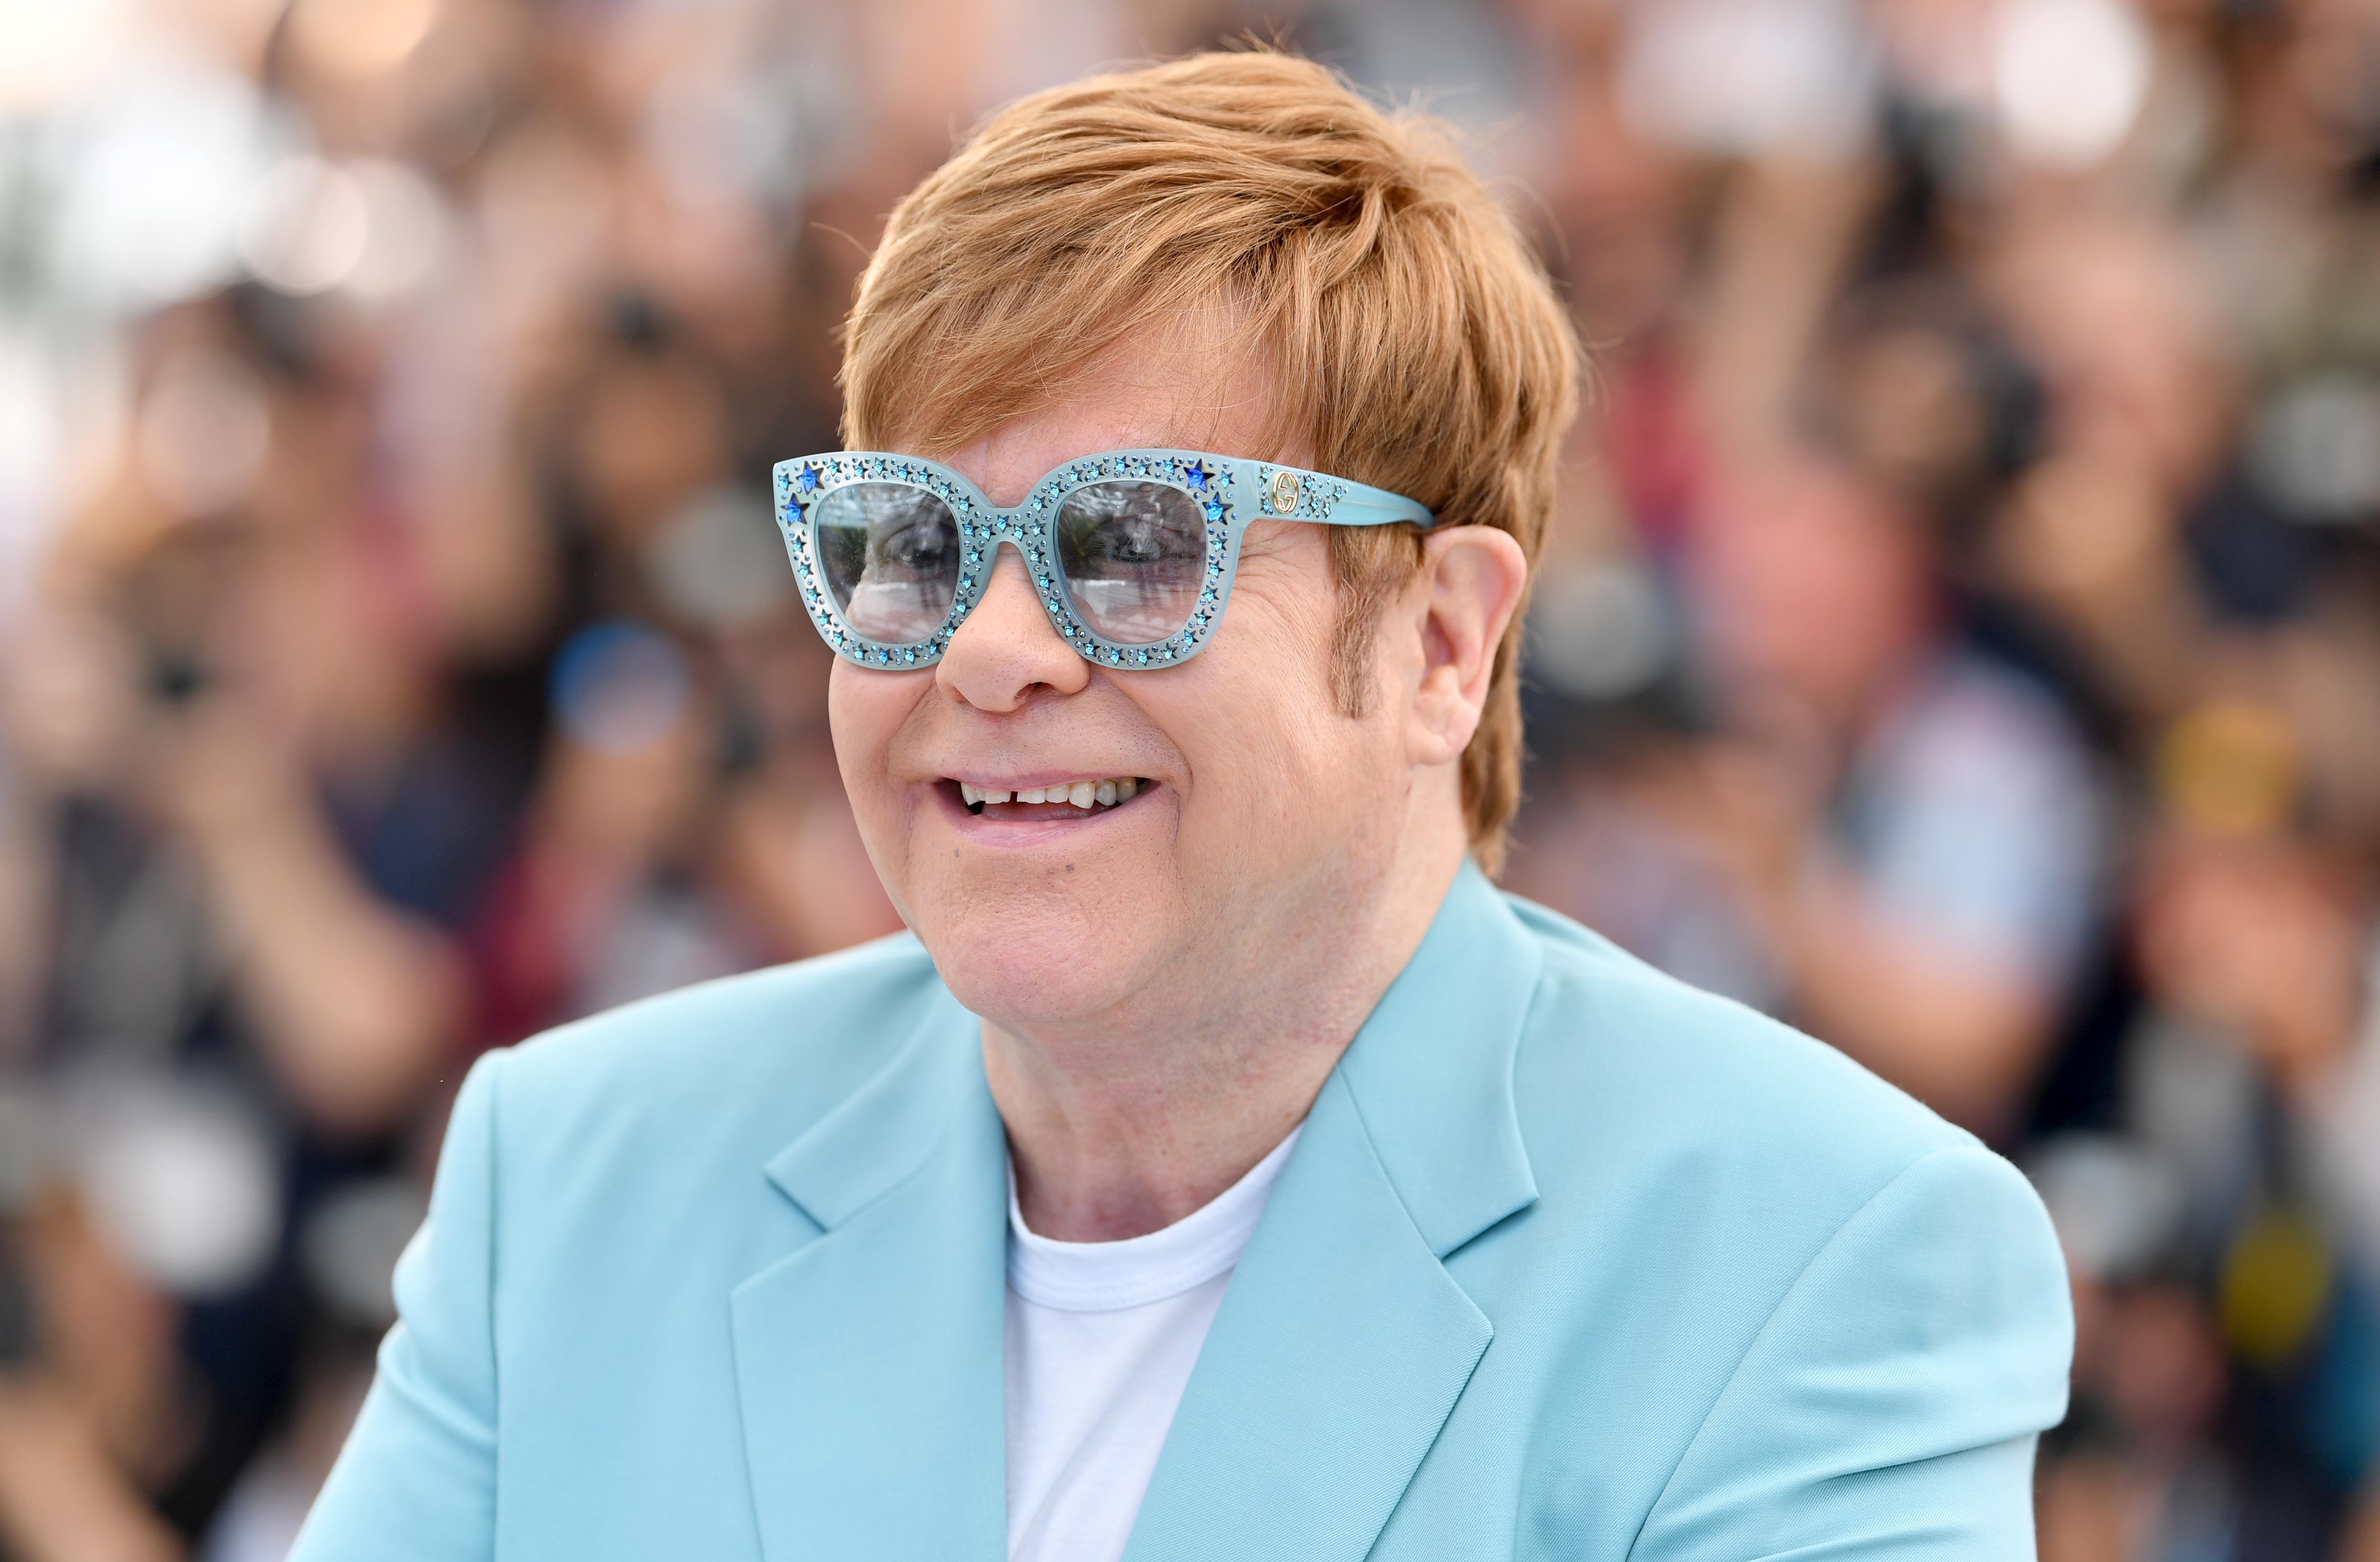 Elton John Postpones US Tour Dates to 2022 — Watch His Big Announcement